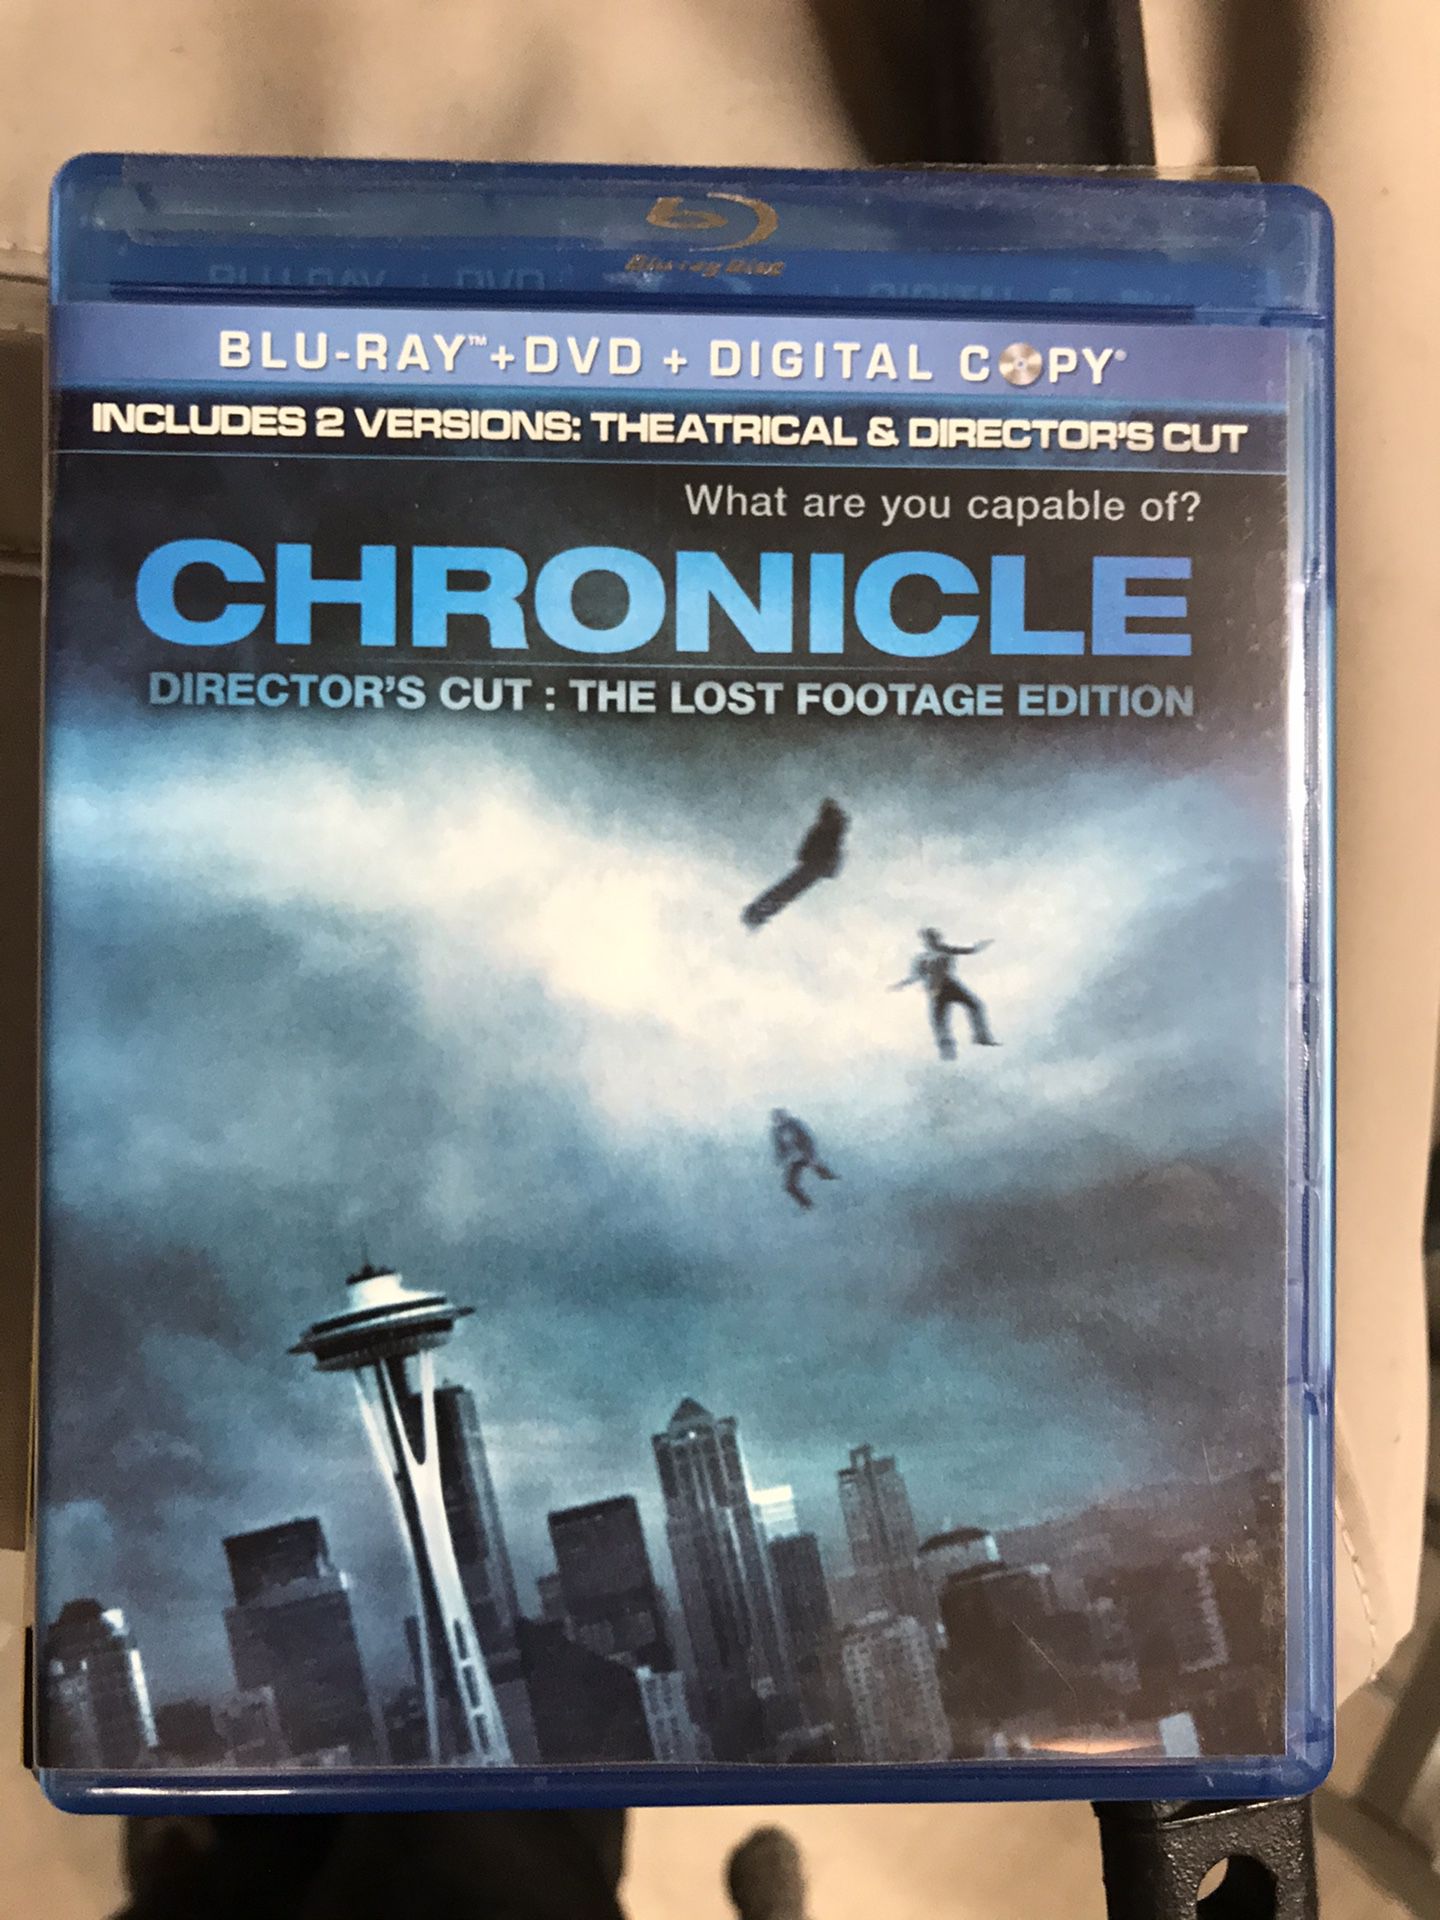 Blu-Ray /DVD / Digital copy available